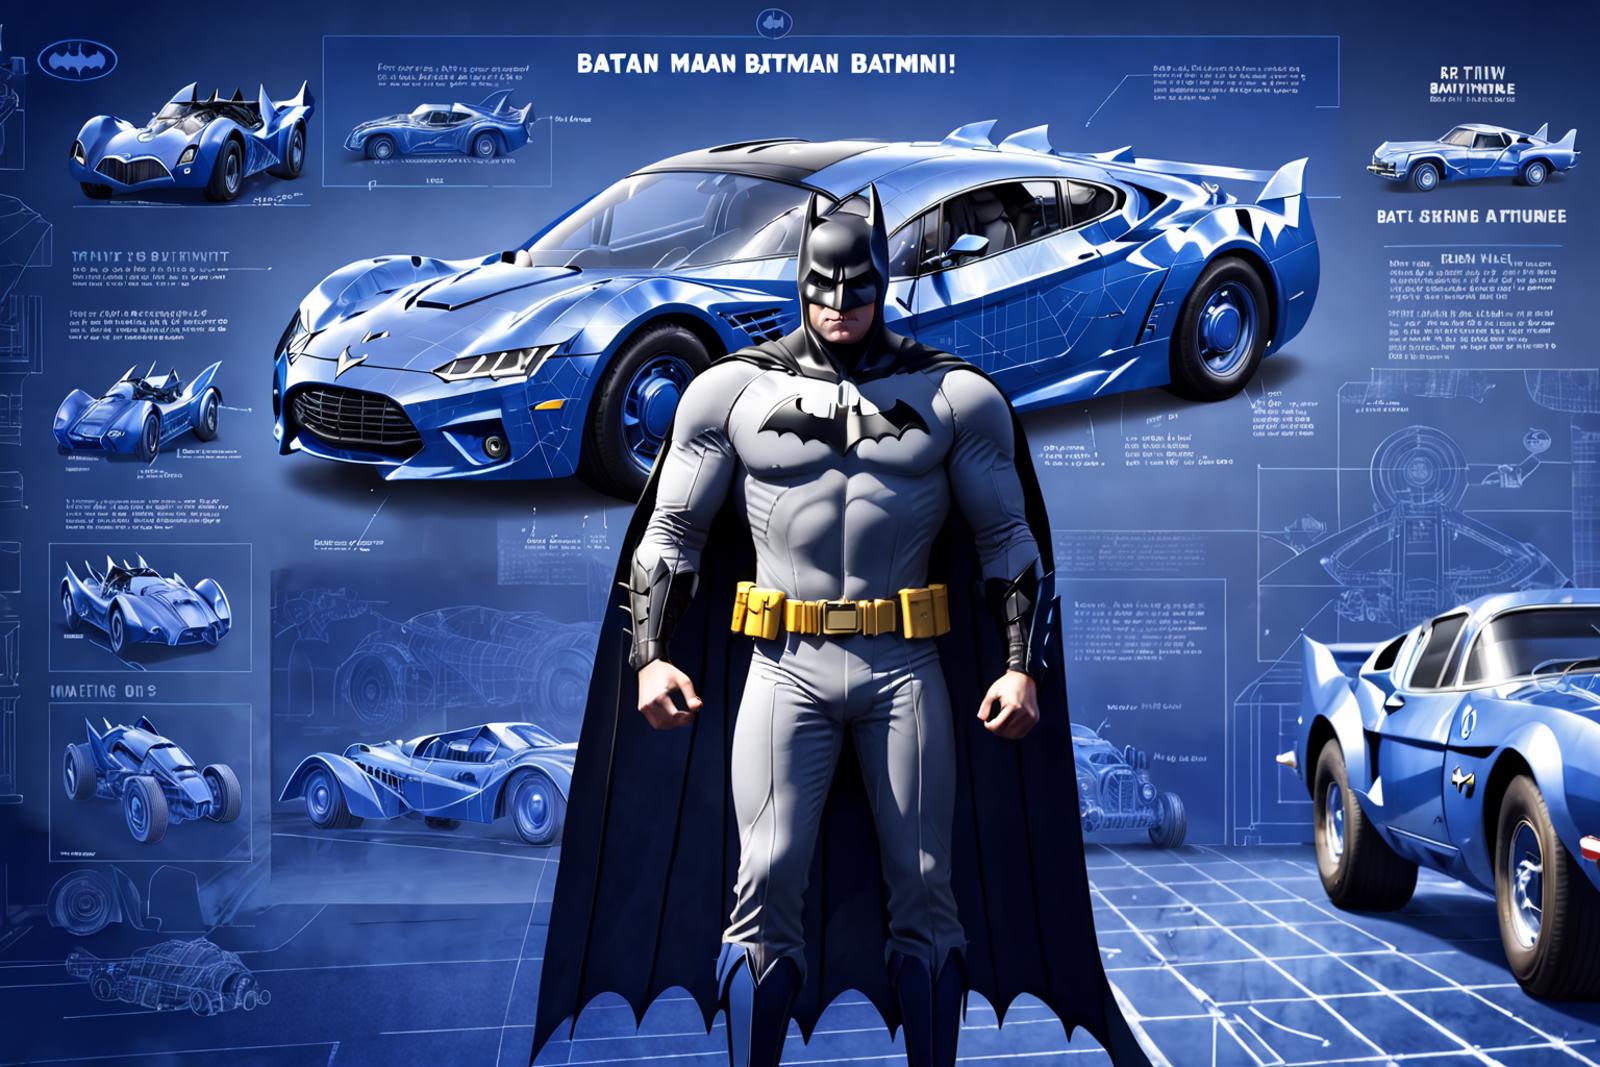 Batman standing next to a blue car with a Batman logo on it.